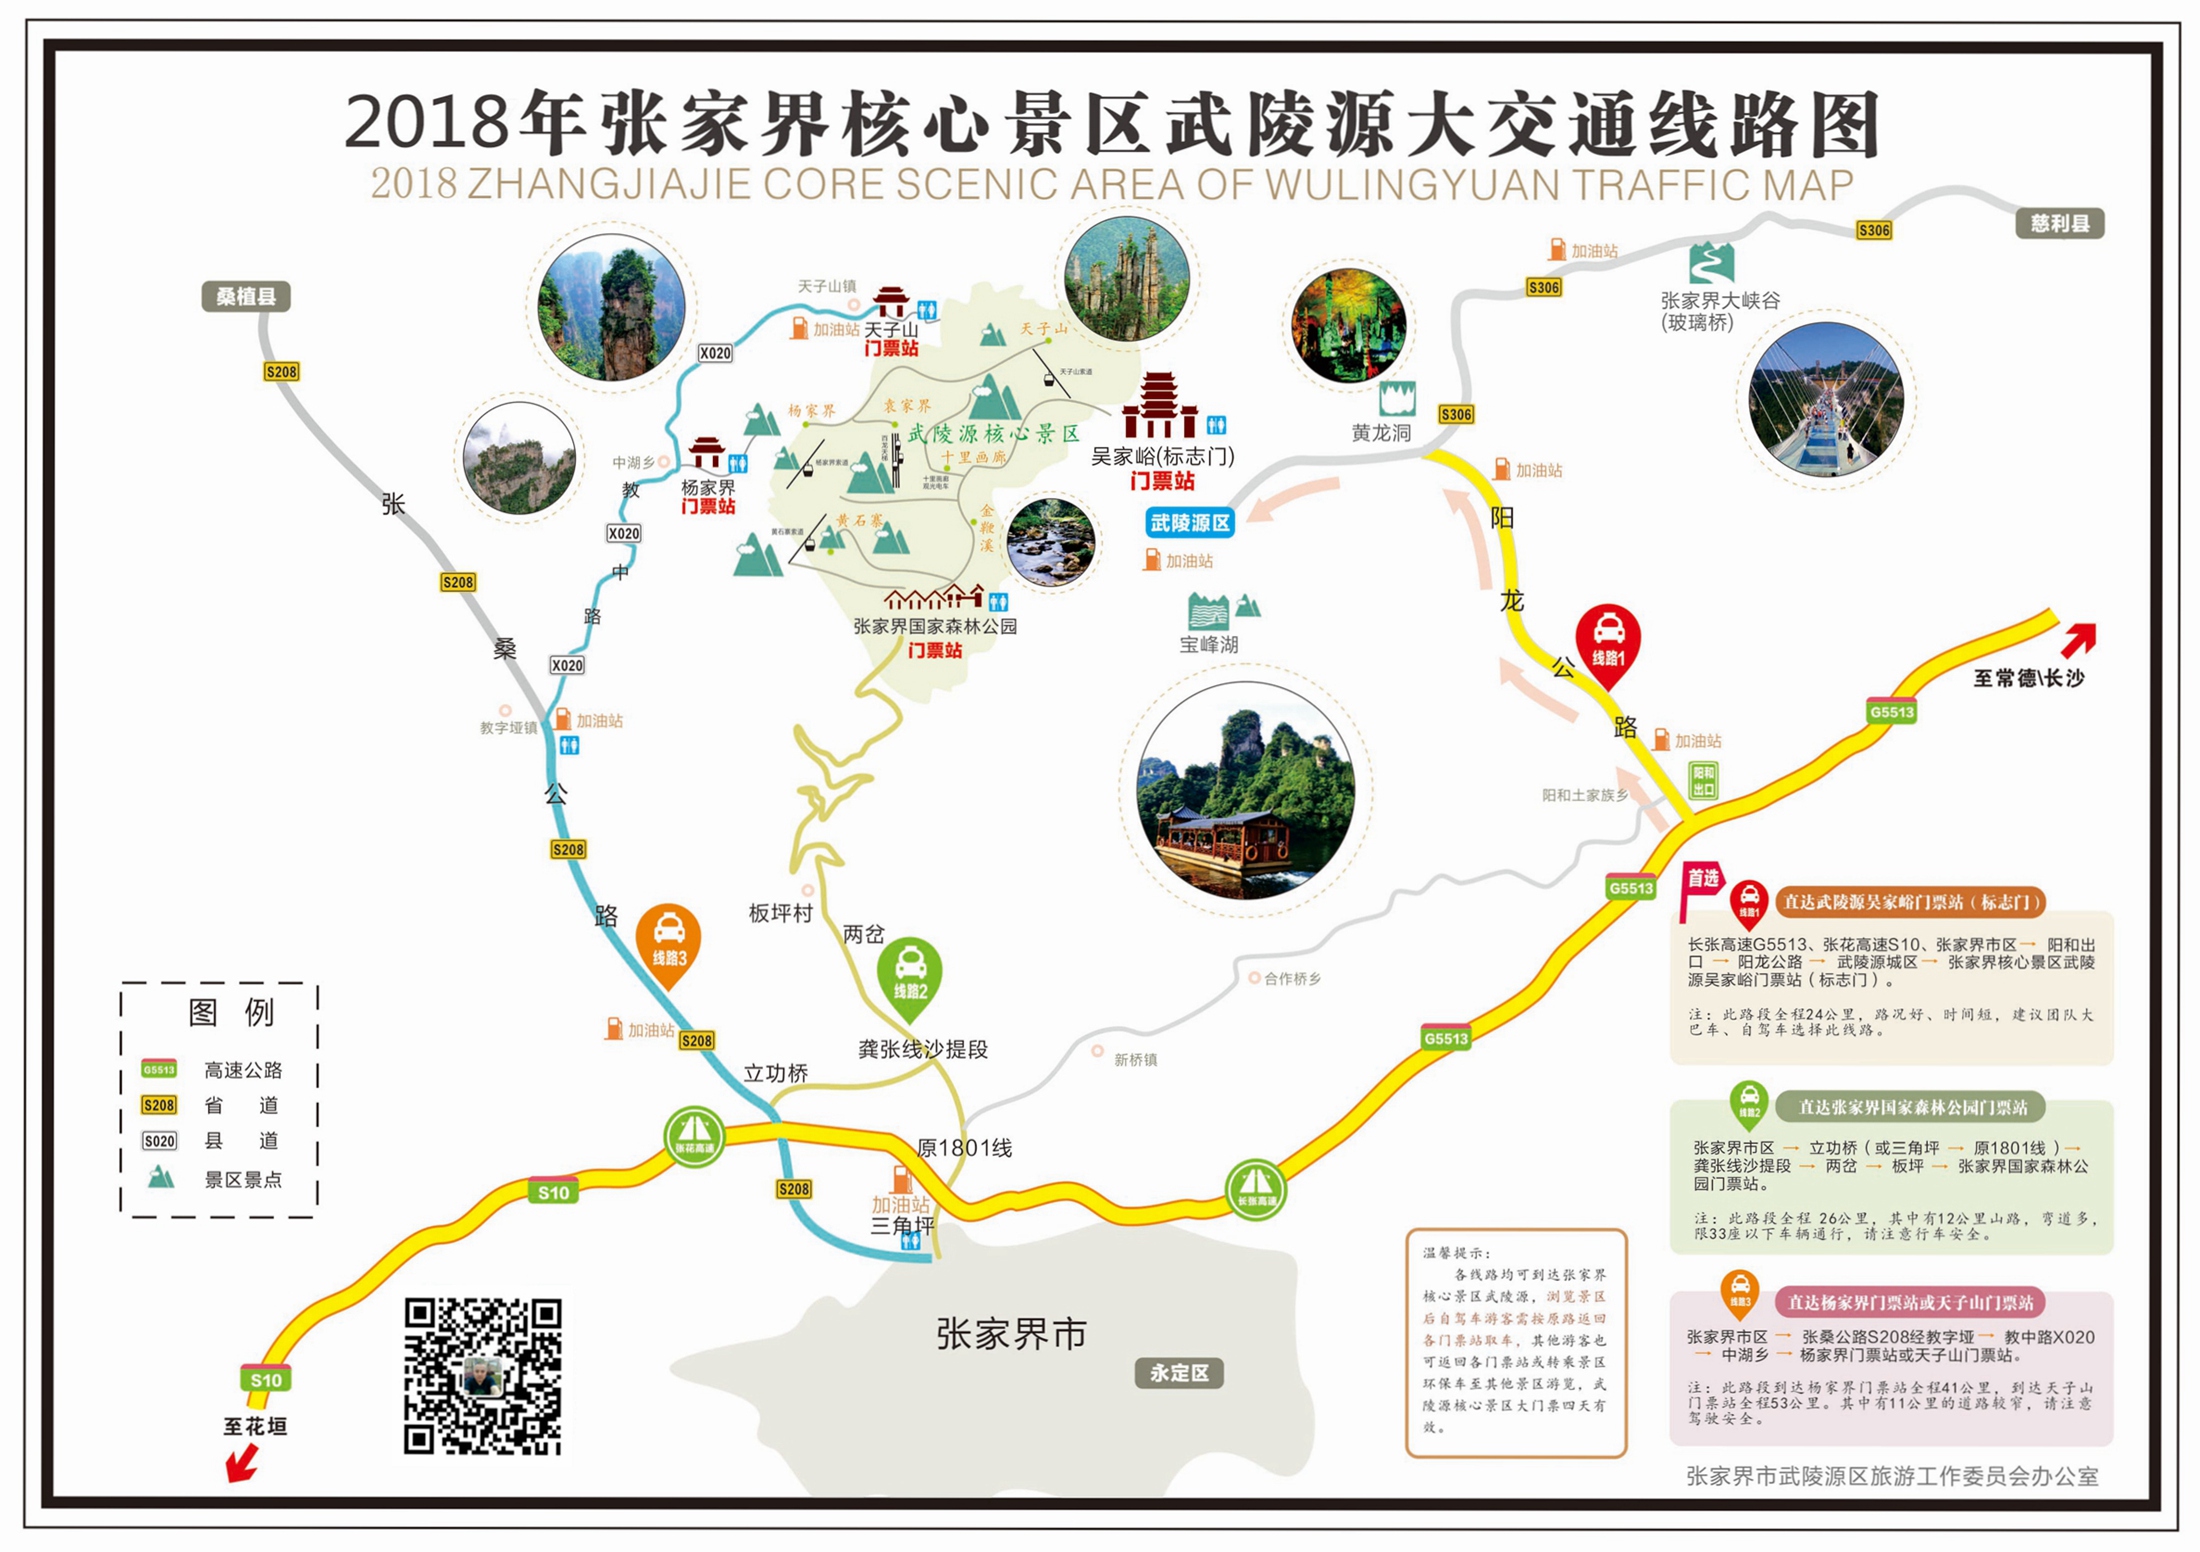 2018 Wulingyuan core scenic area traffic map